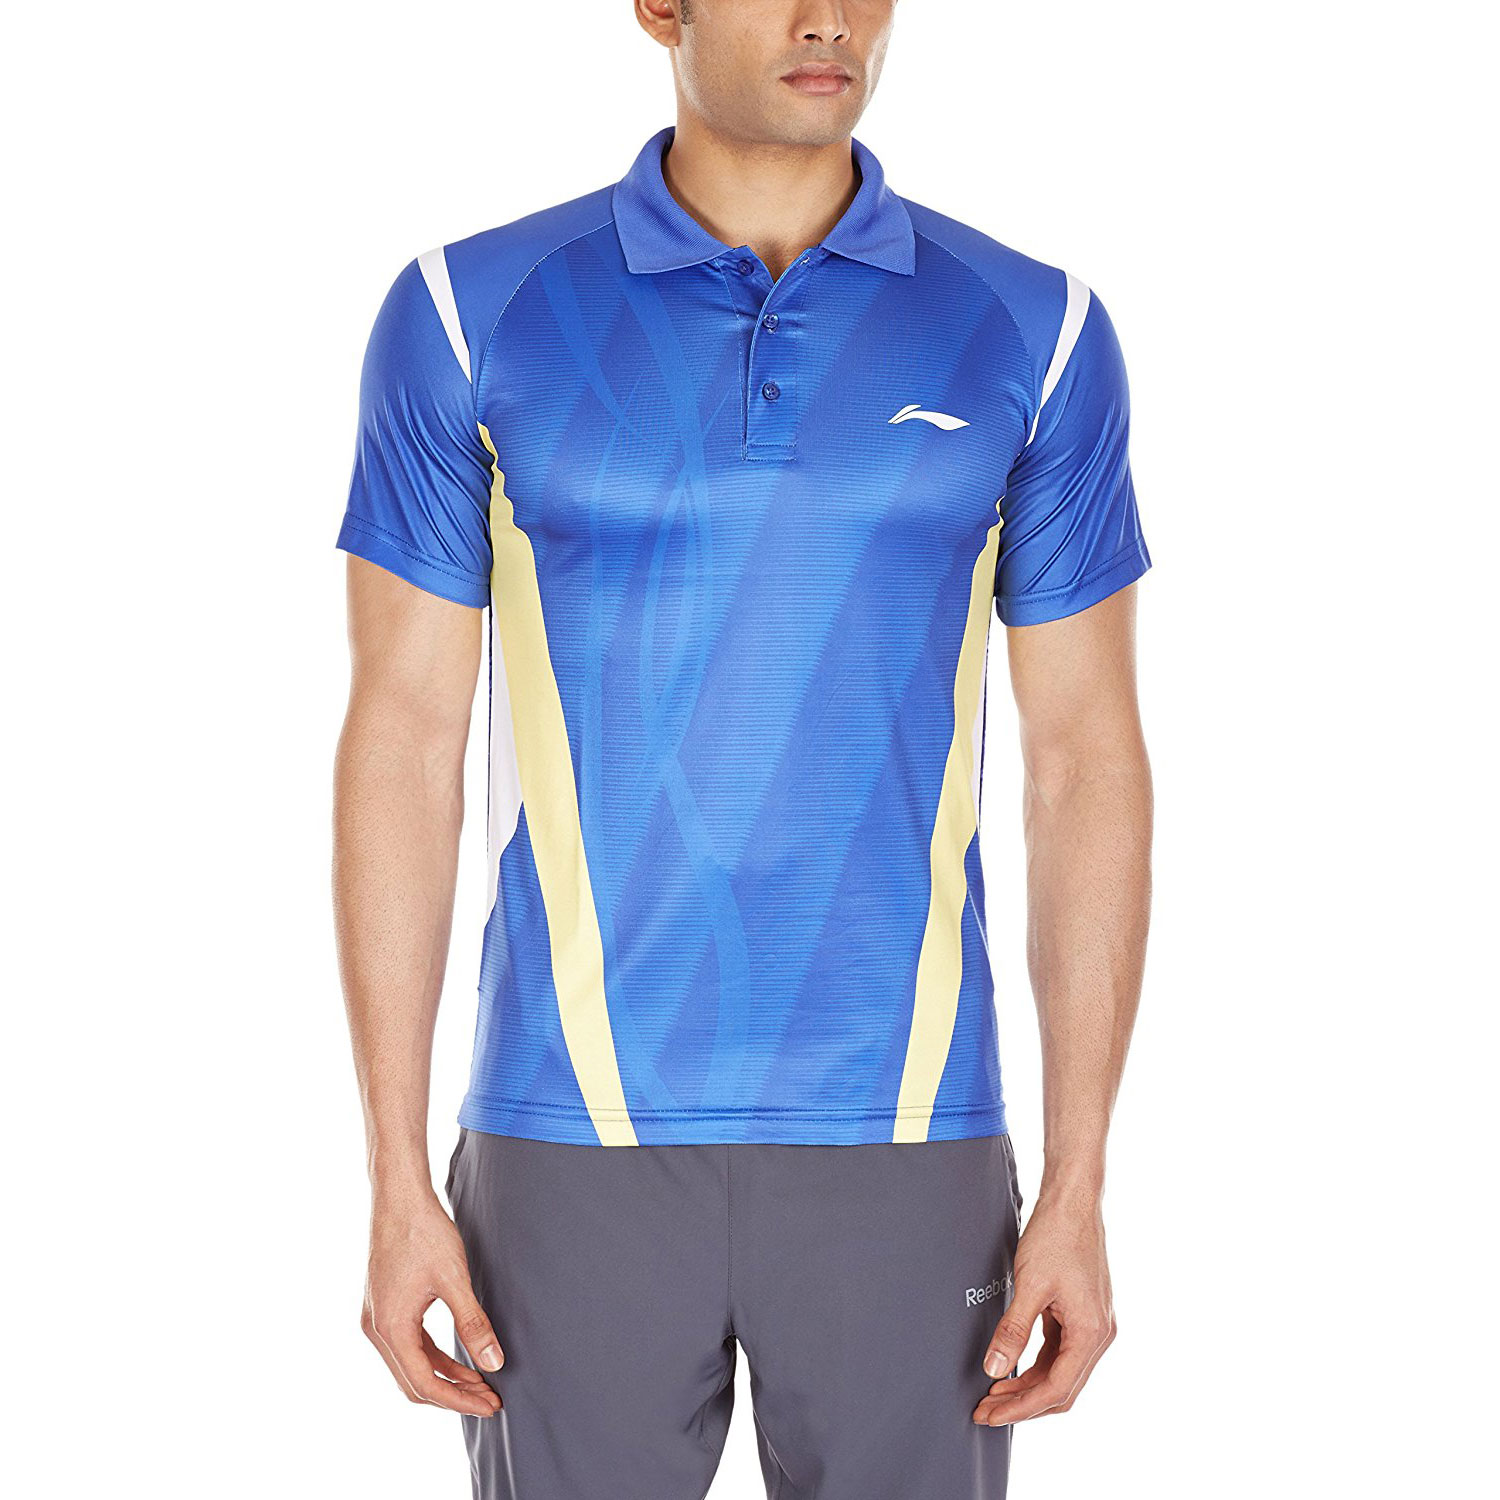  Li-Ning ALPH421-4 Collar Badminton T-Shirt, Men's (Blue) 